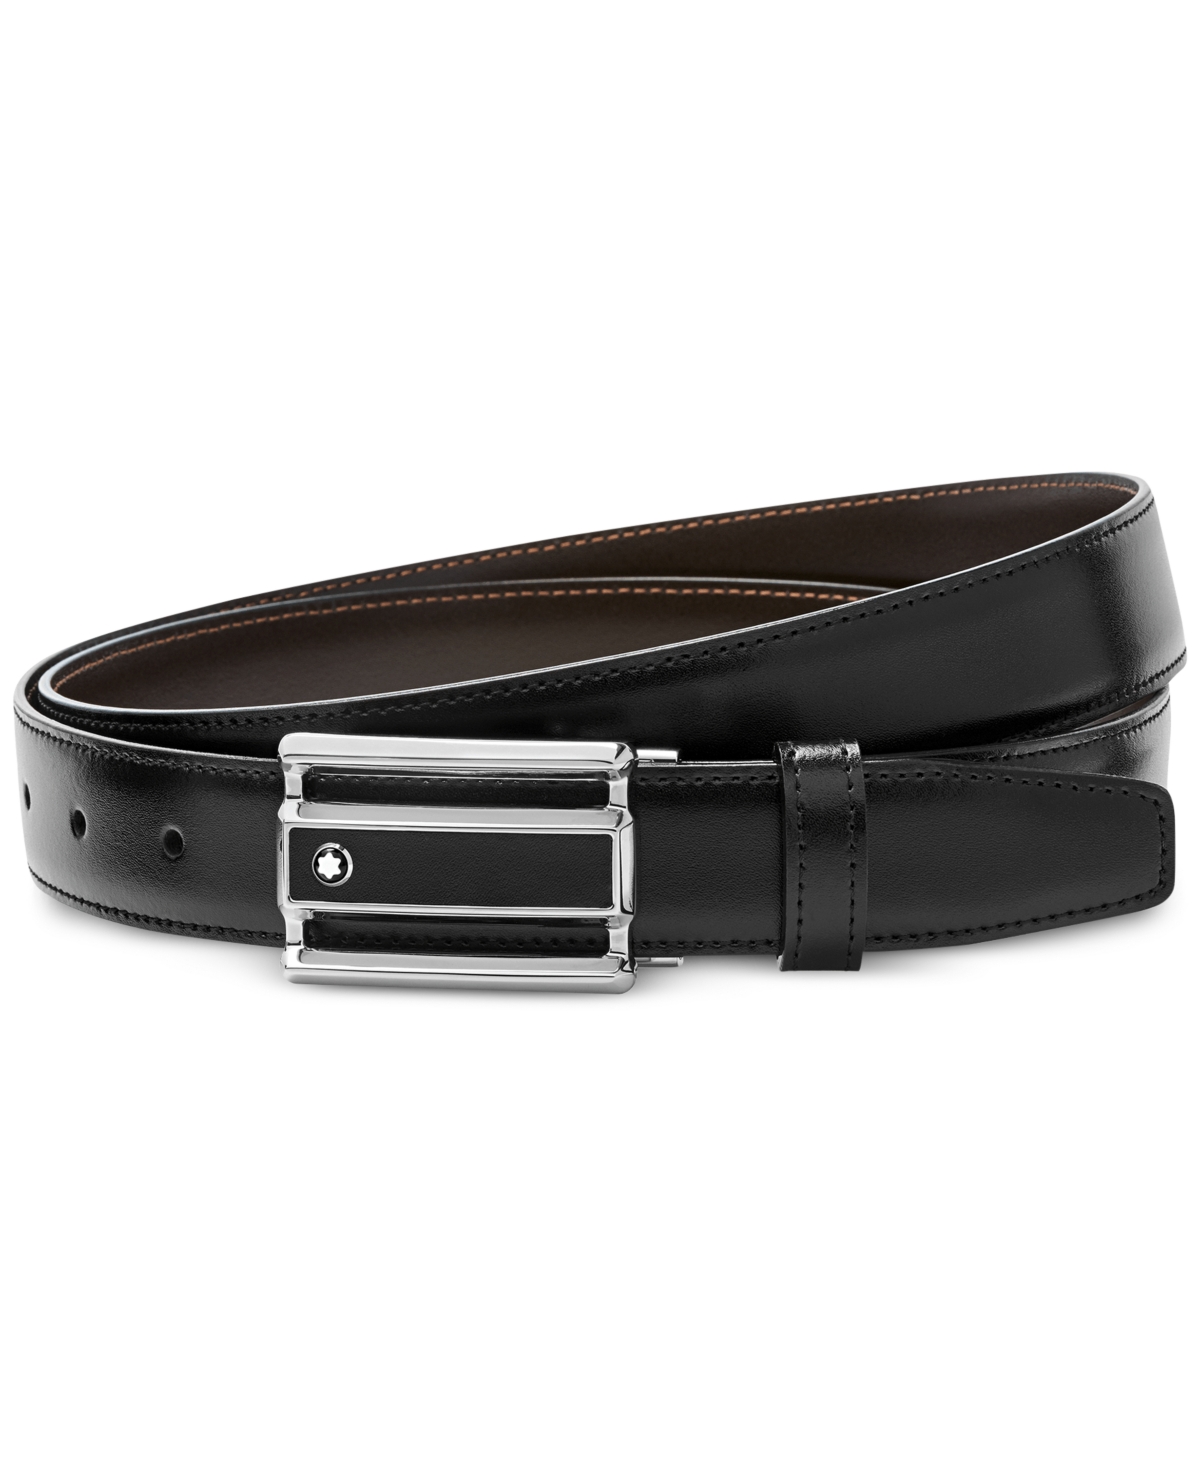 Montblanc Men's Reversible Leather Belt In No Color